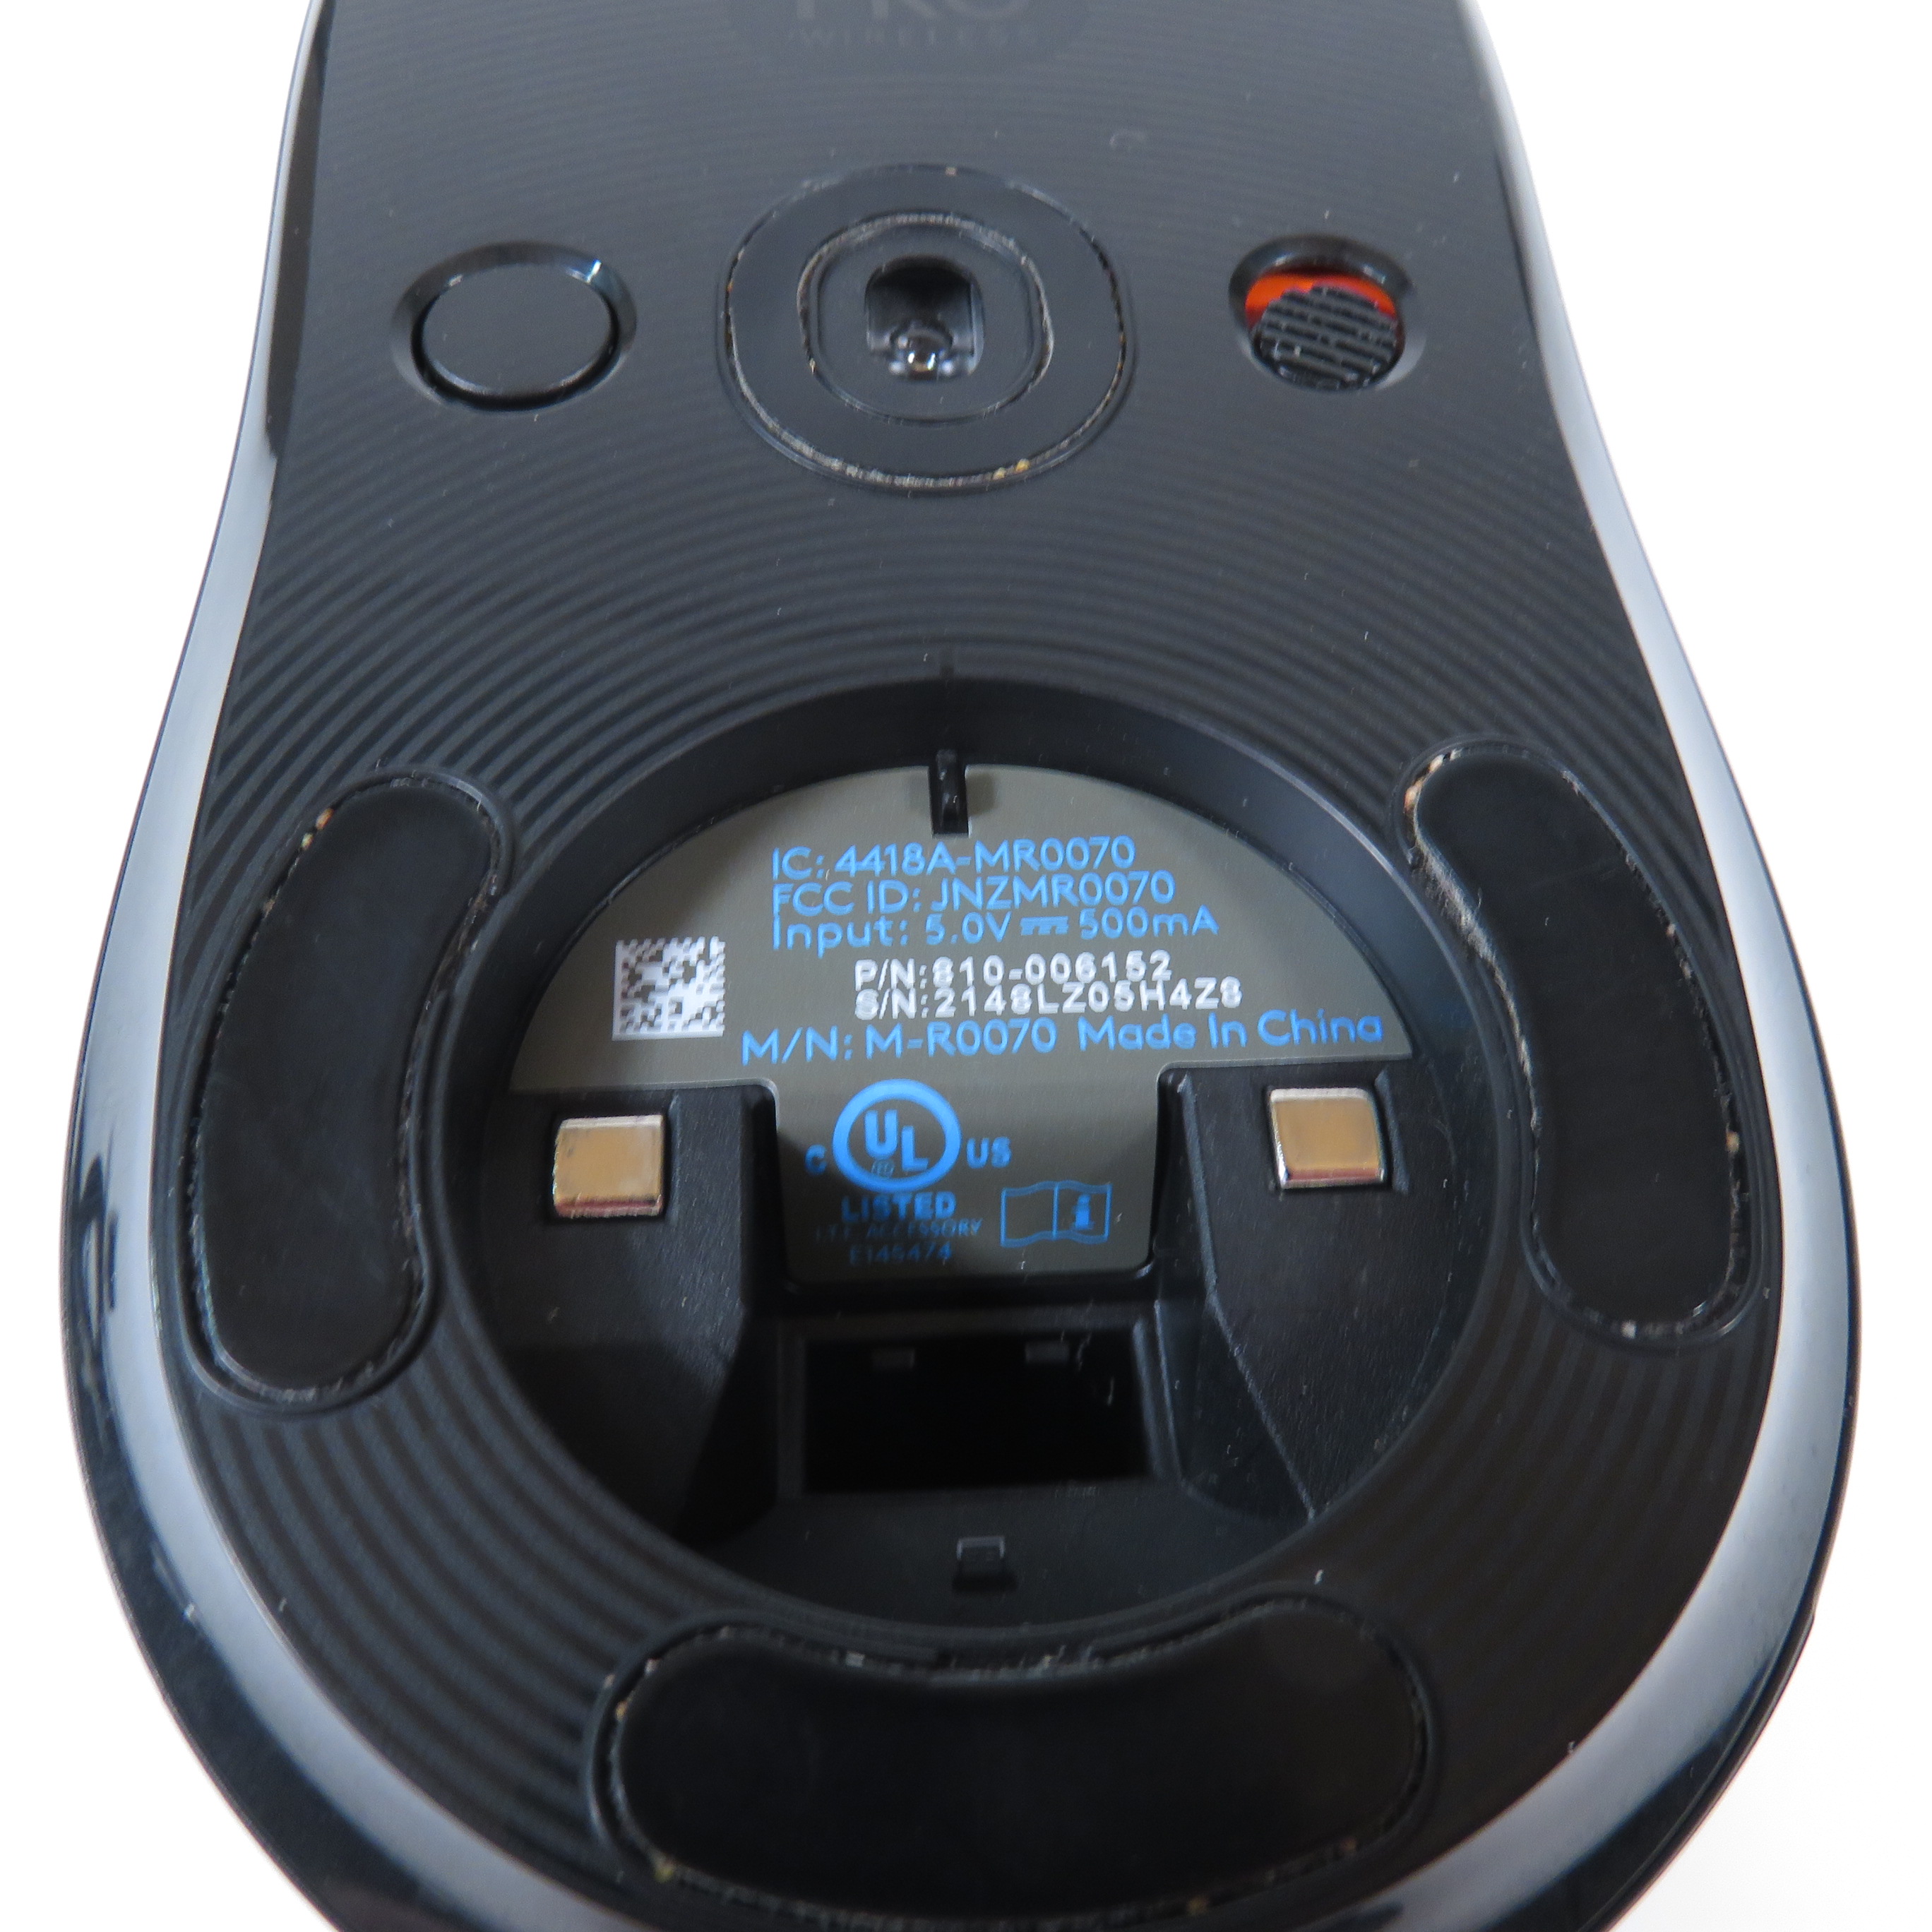 Logitech G Pro Wireless Gaming Mouse Esports Grade Performance BLACK  910-005270